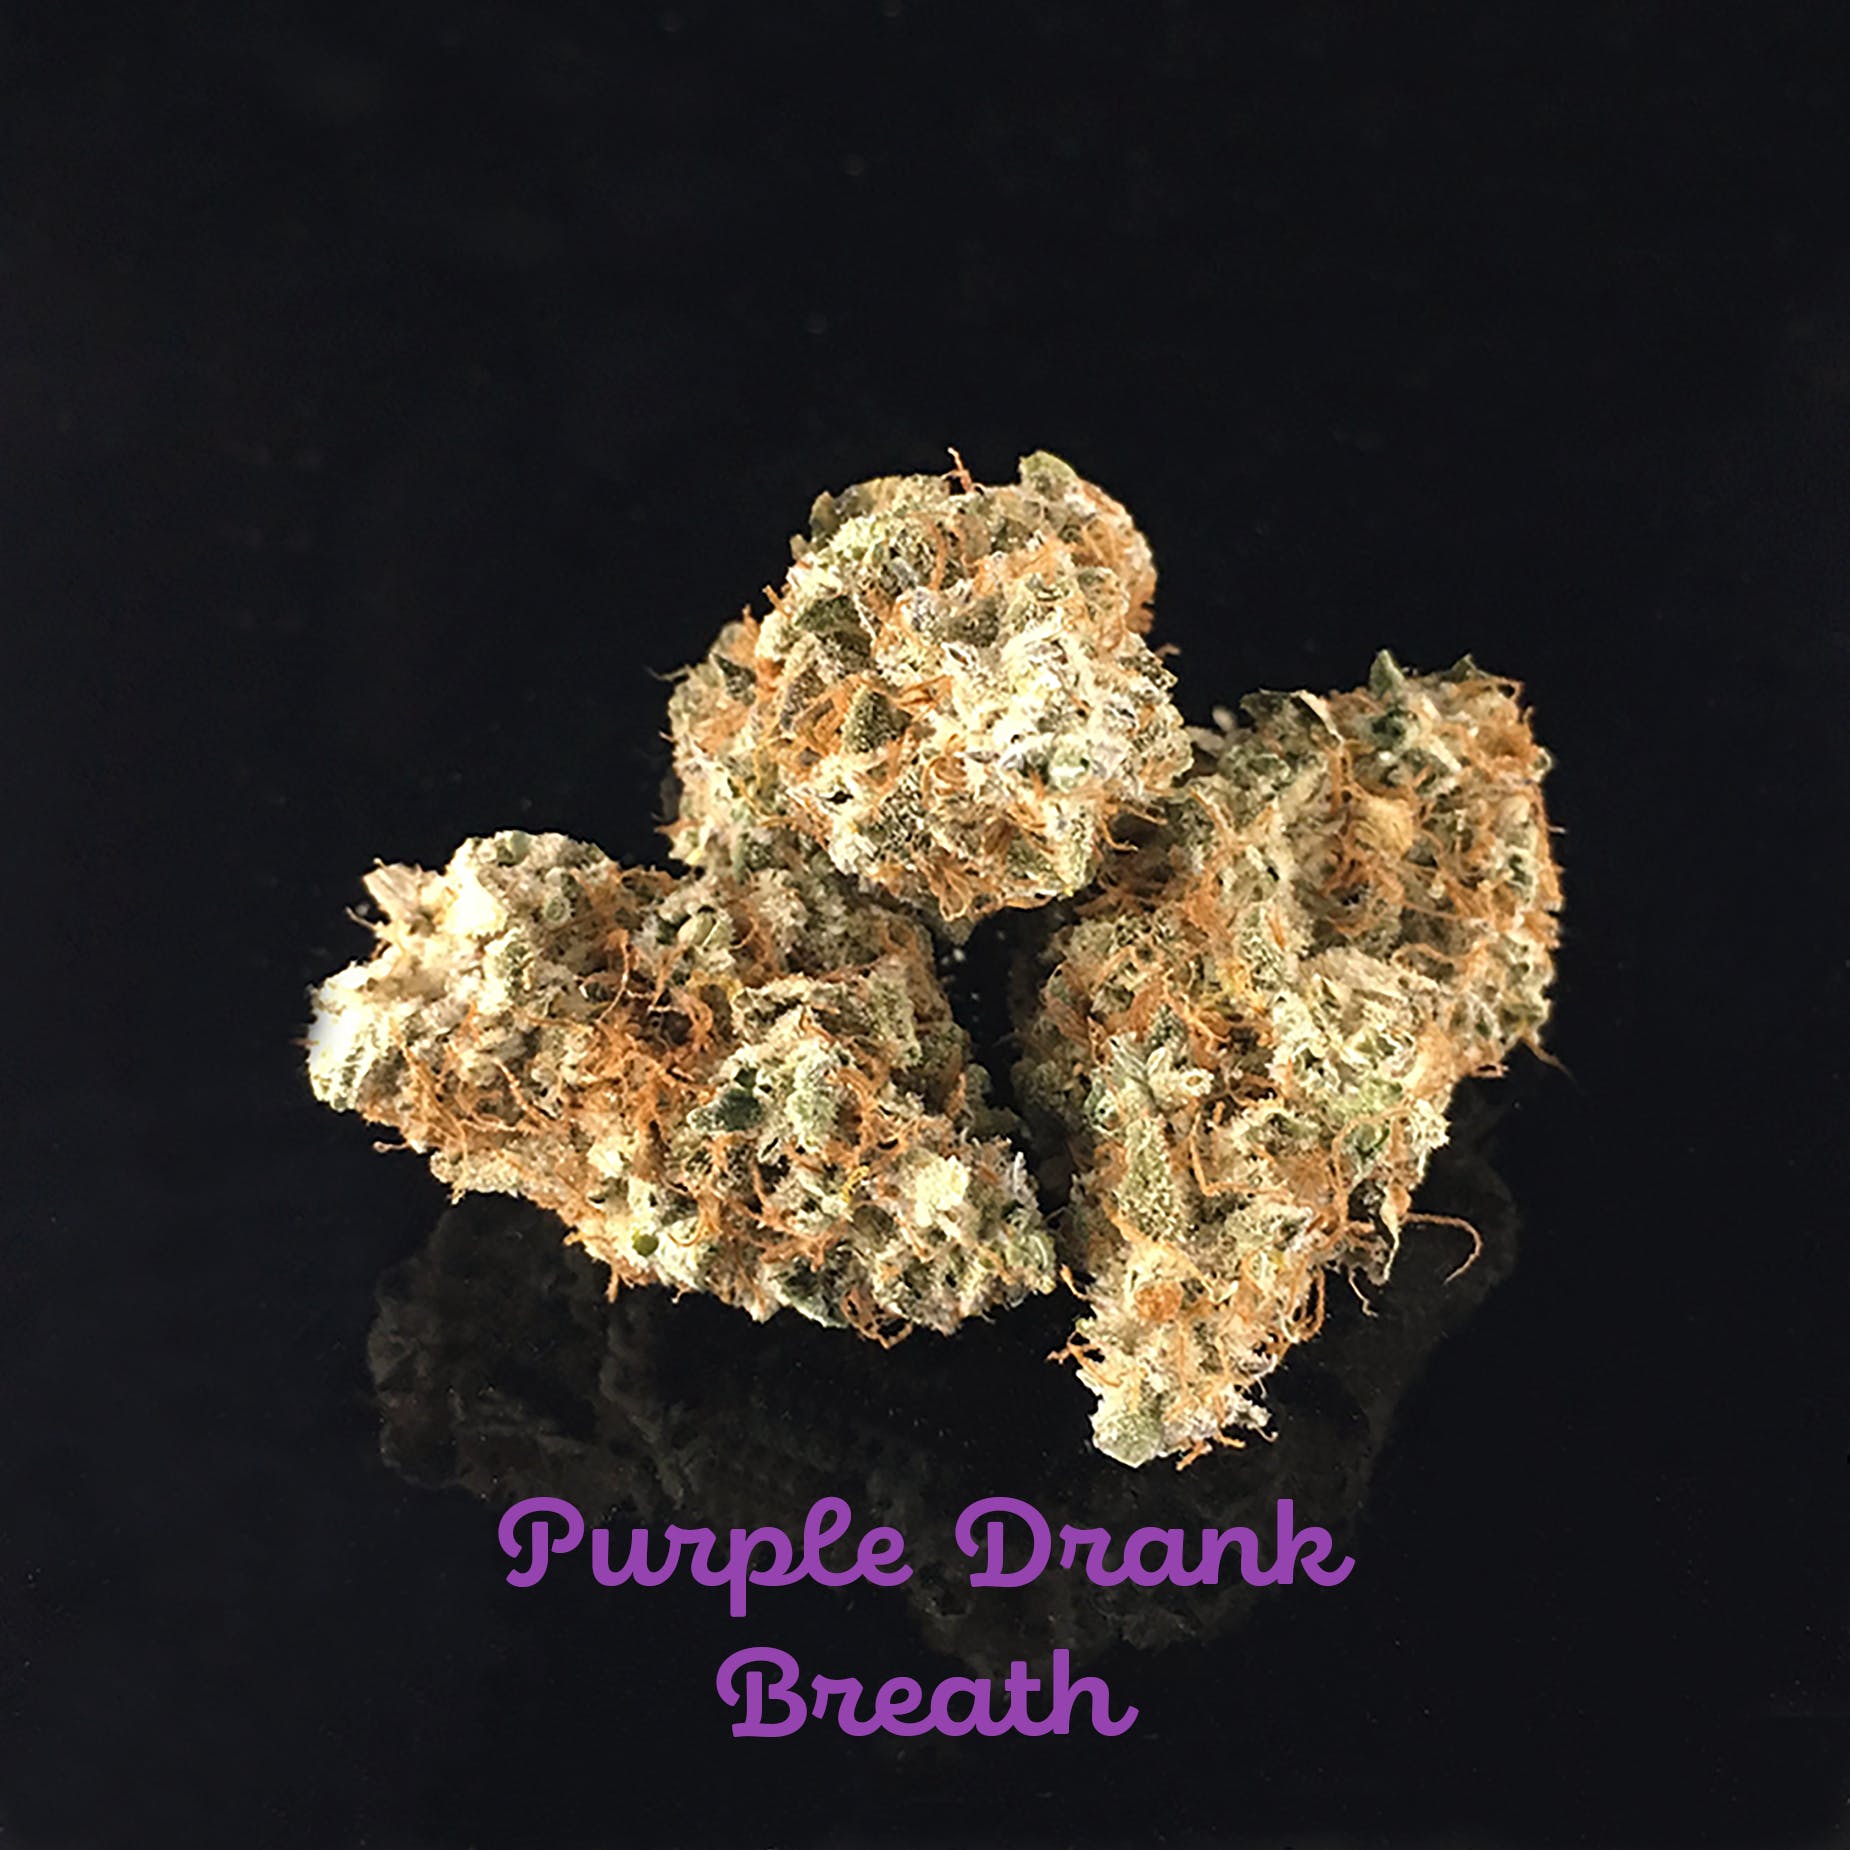 Purple Drank Breath - 25.9% THC